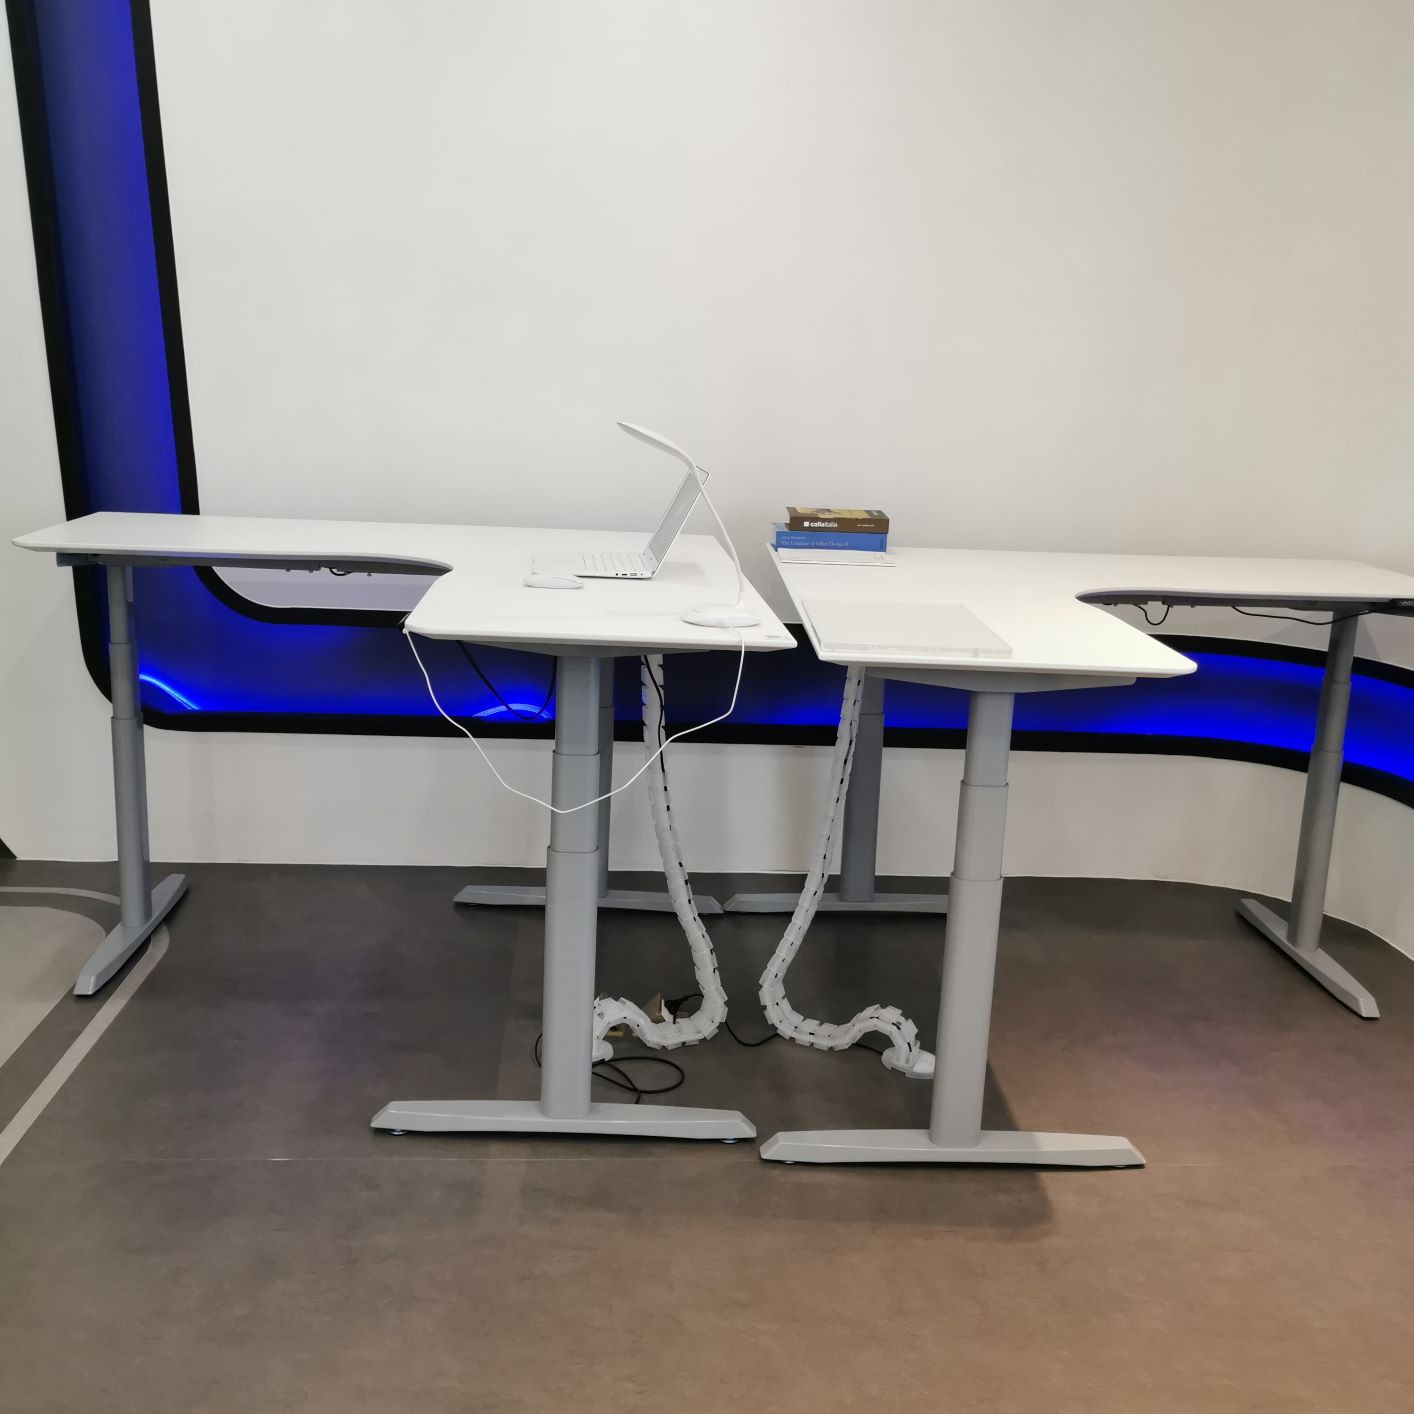 Hight Quality Flexible office ergonomics under desk snake Cable management